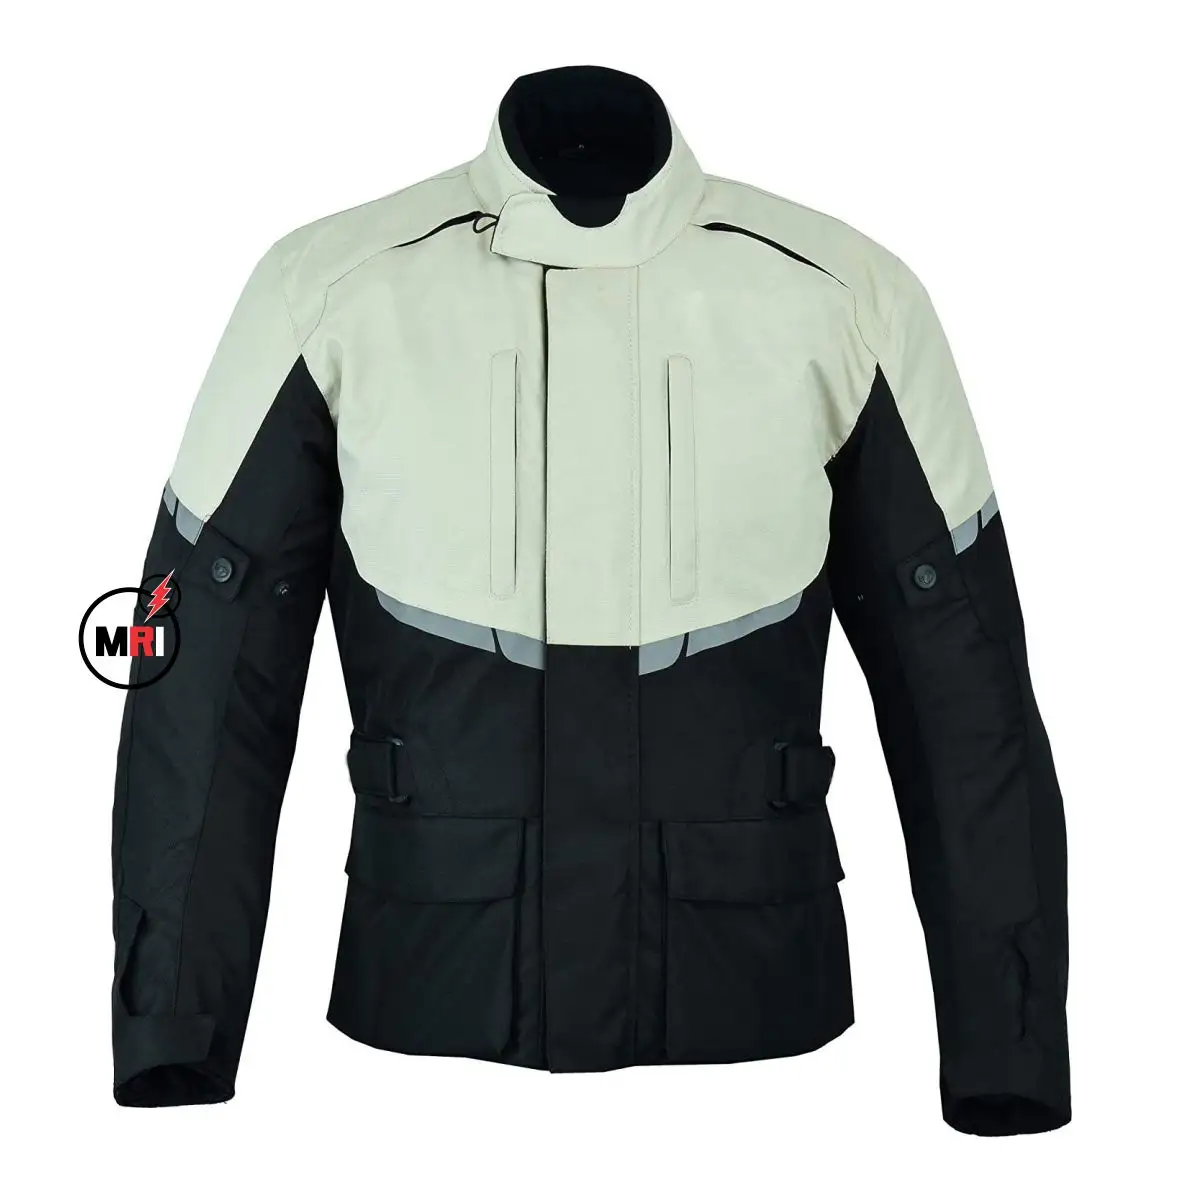 Premium quality motorcycle jacket Motorbike Waterproof Jacket protection for riders